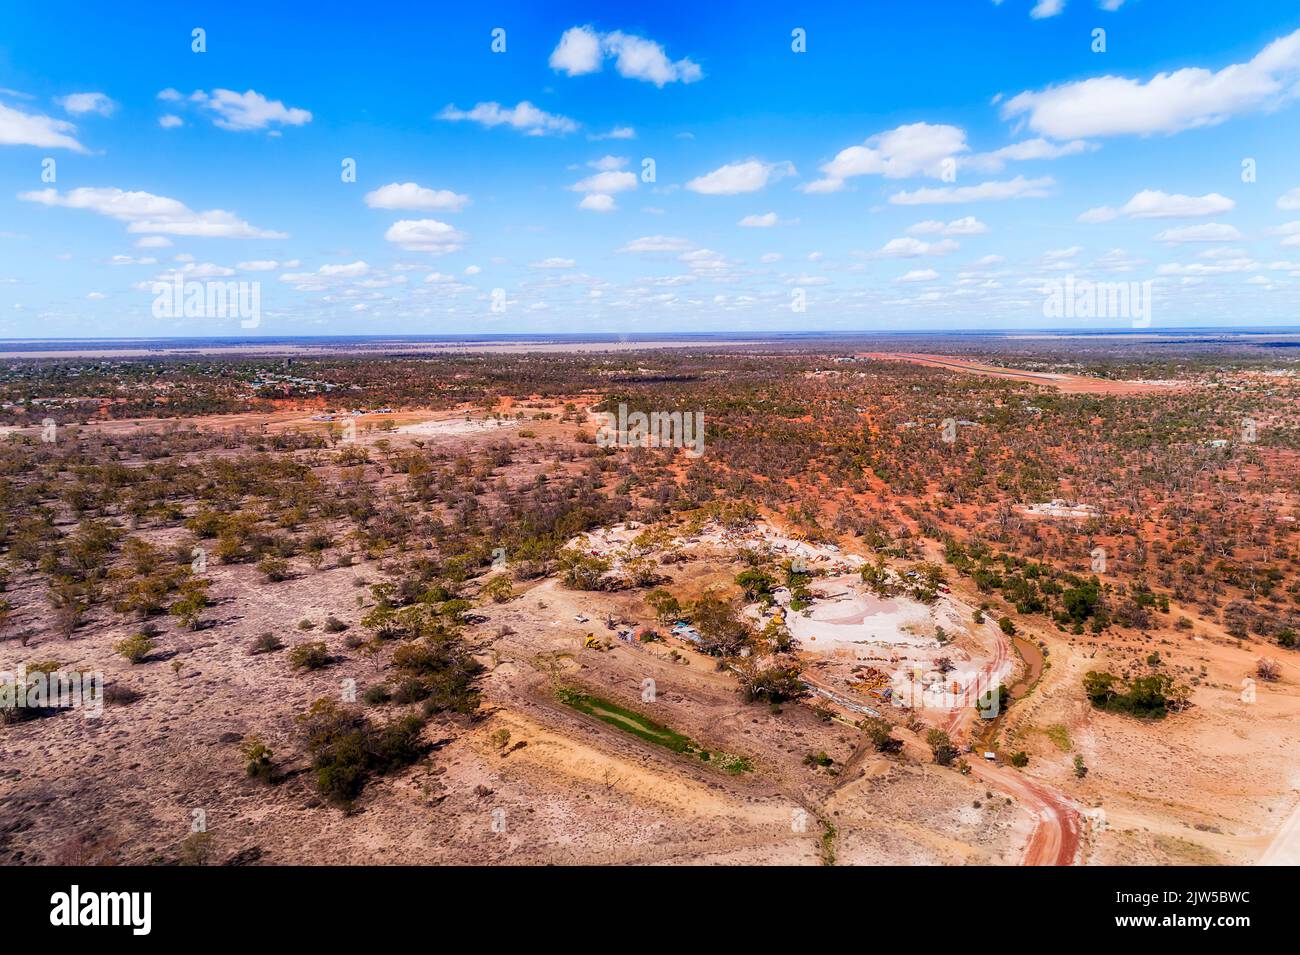 Flat plains of red soil Australia outback around LIghtning ridge opal mine shafts. Stock Photo